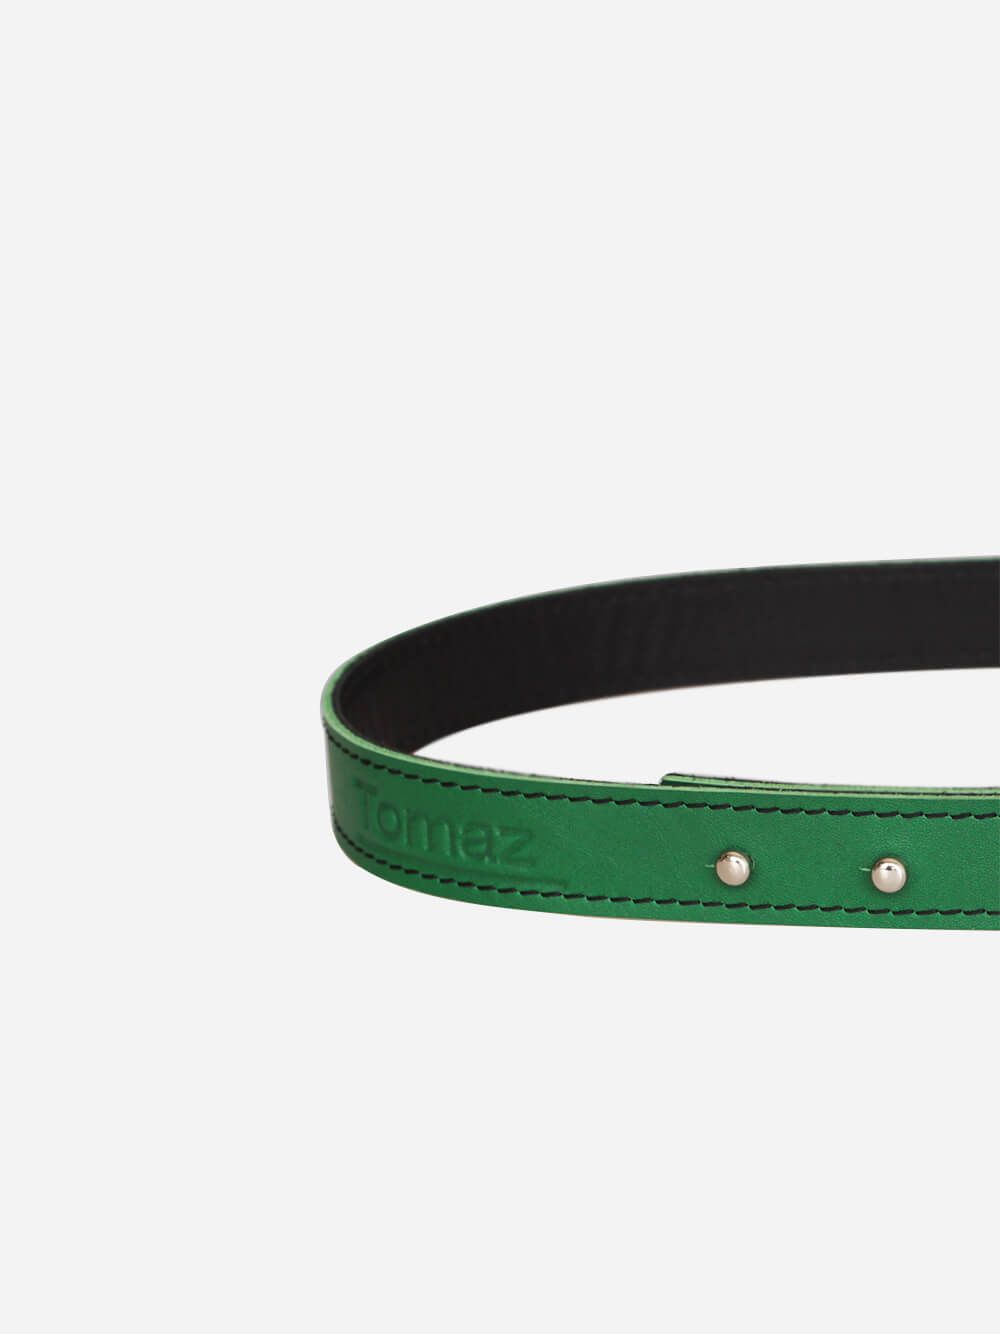 Francis Leather Green Belt | Tomaz